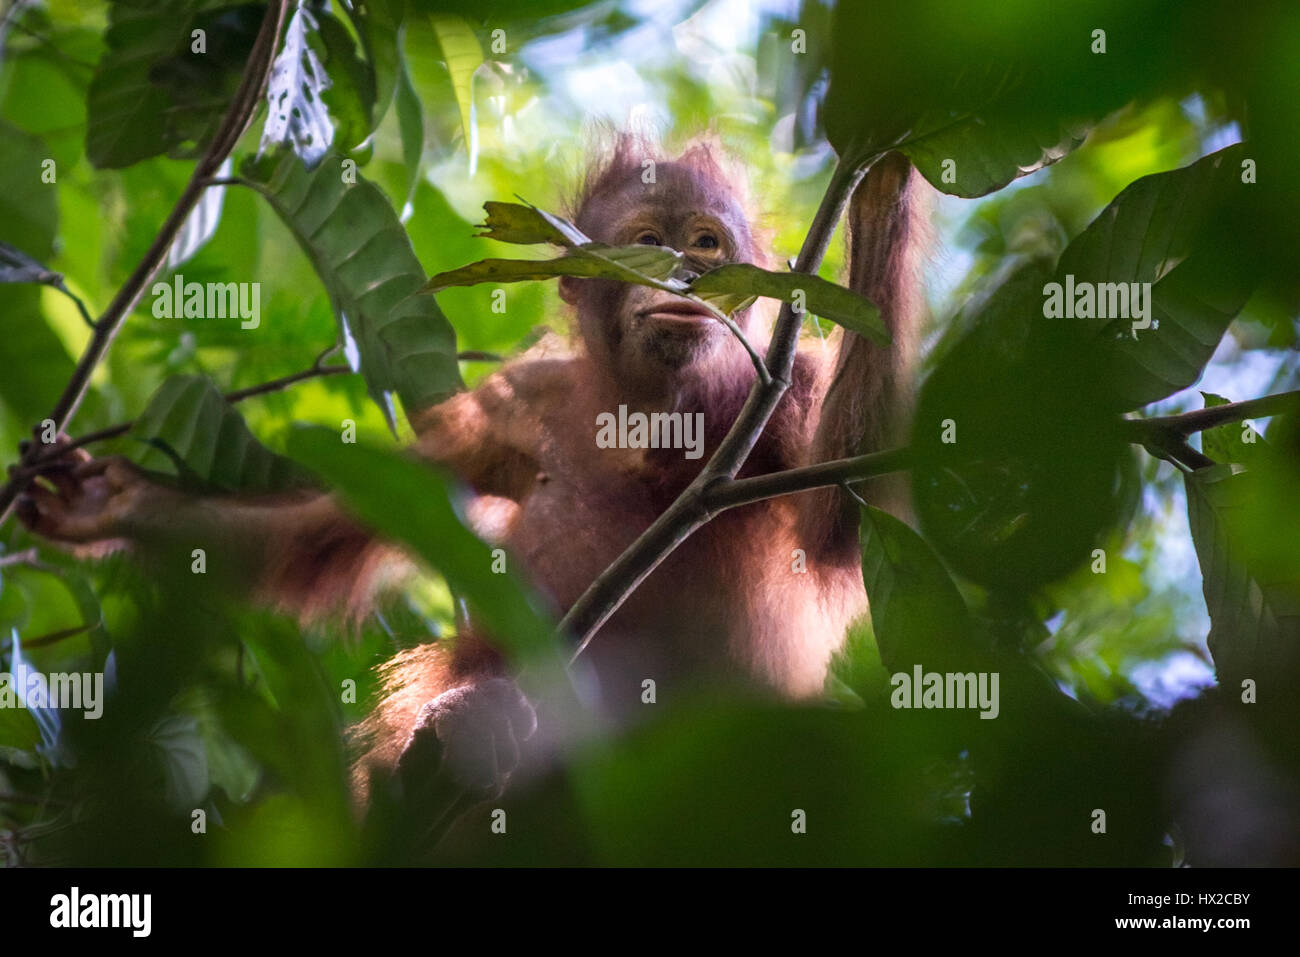 Baby Bornean orangutan searching for foods in Kutai National Park, Indonesia. Stock Photo